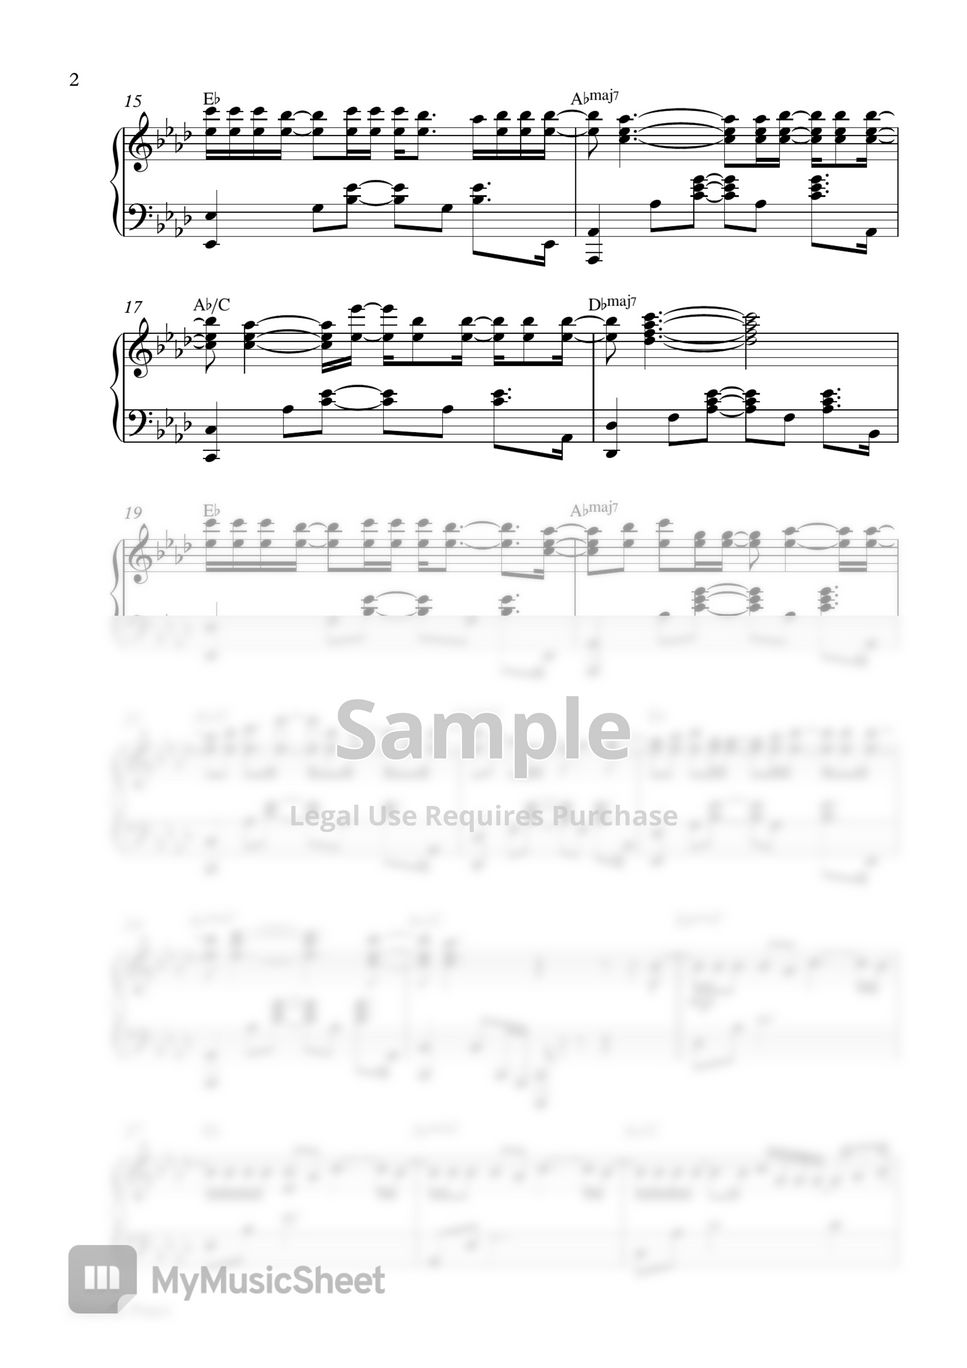 TXT - Magic (Piano Sheet) by Pianella Piano